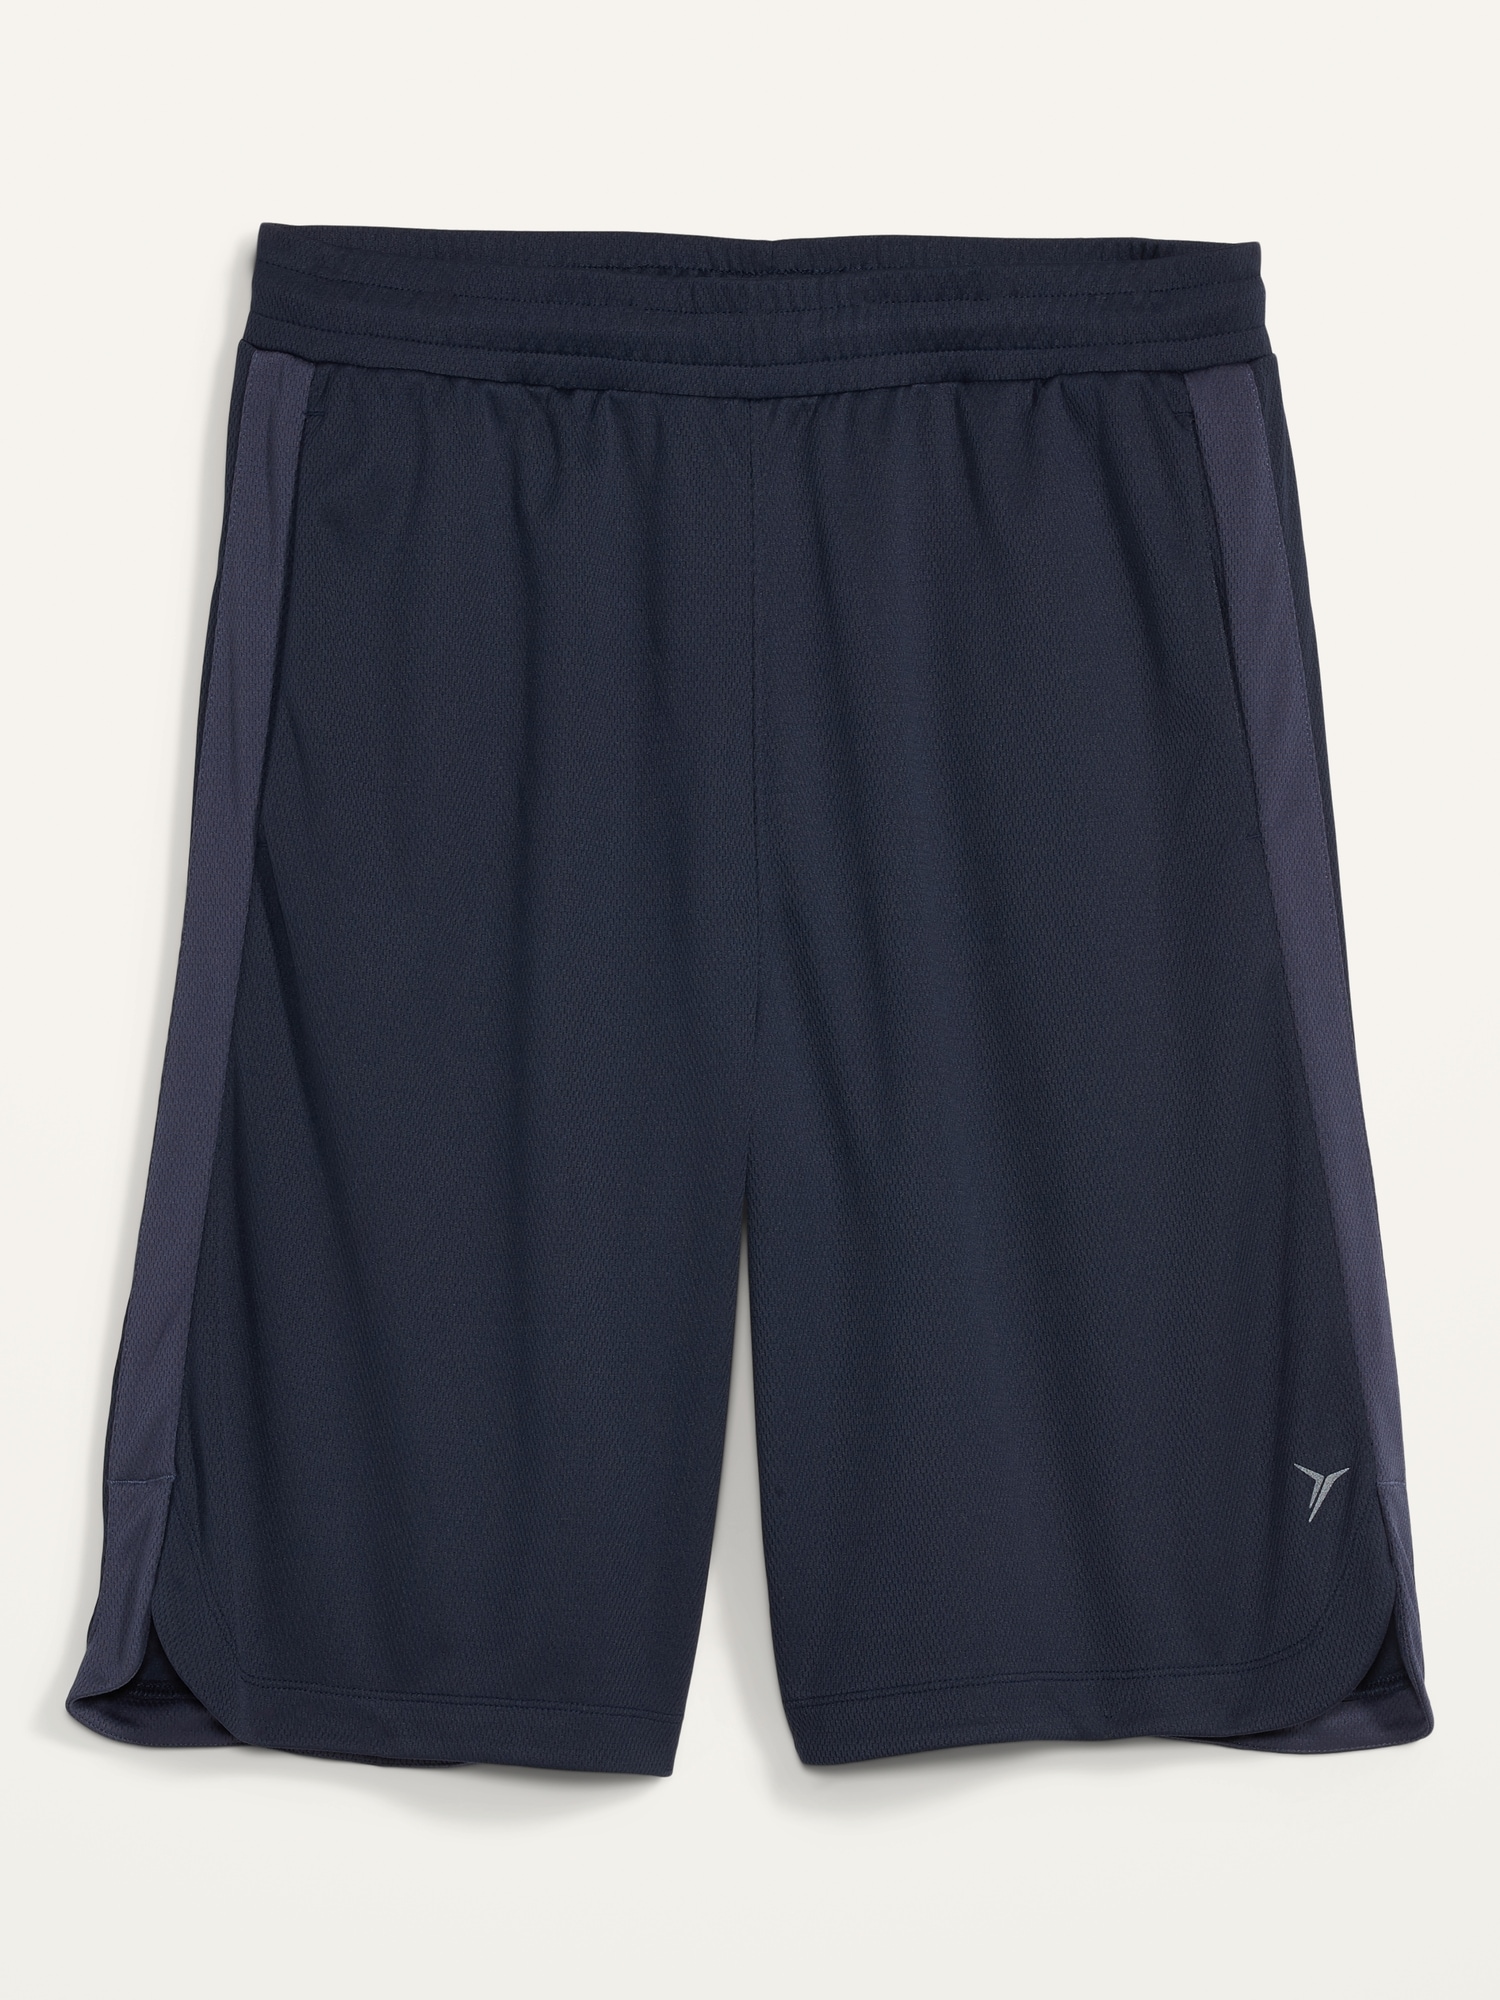 Go-Dry Mesh Basketball Shorts -- 10-inch inseam